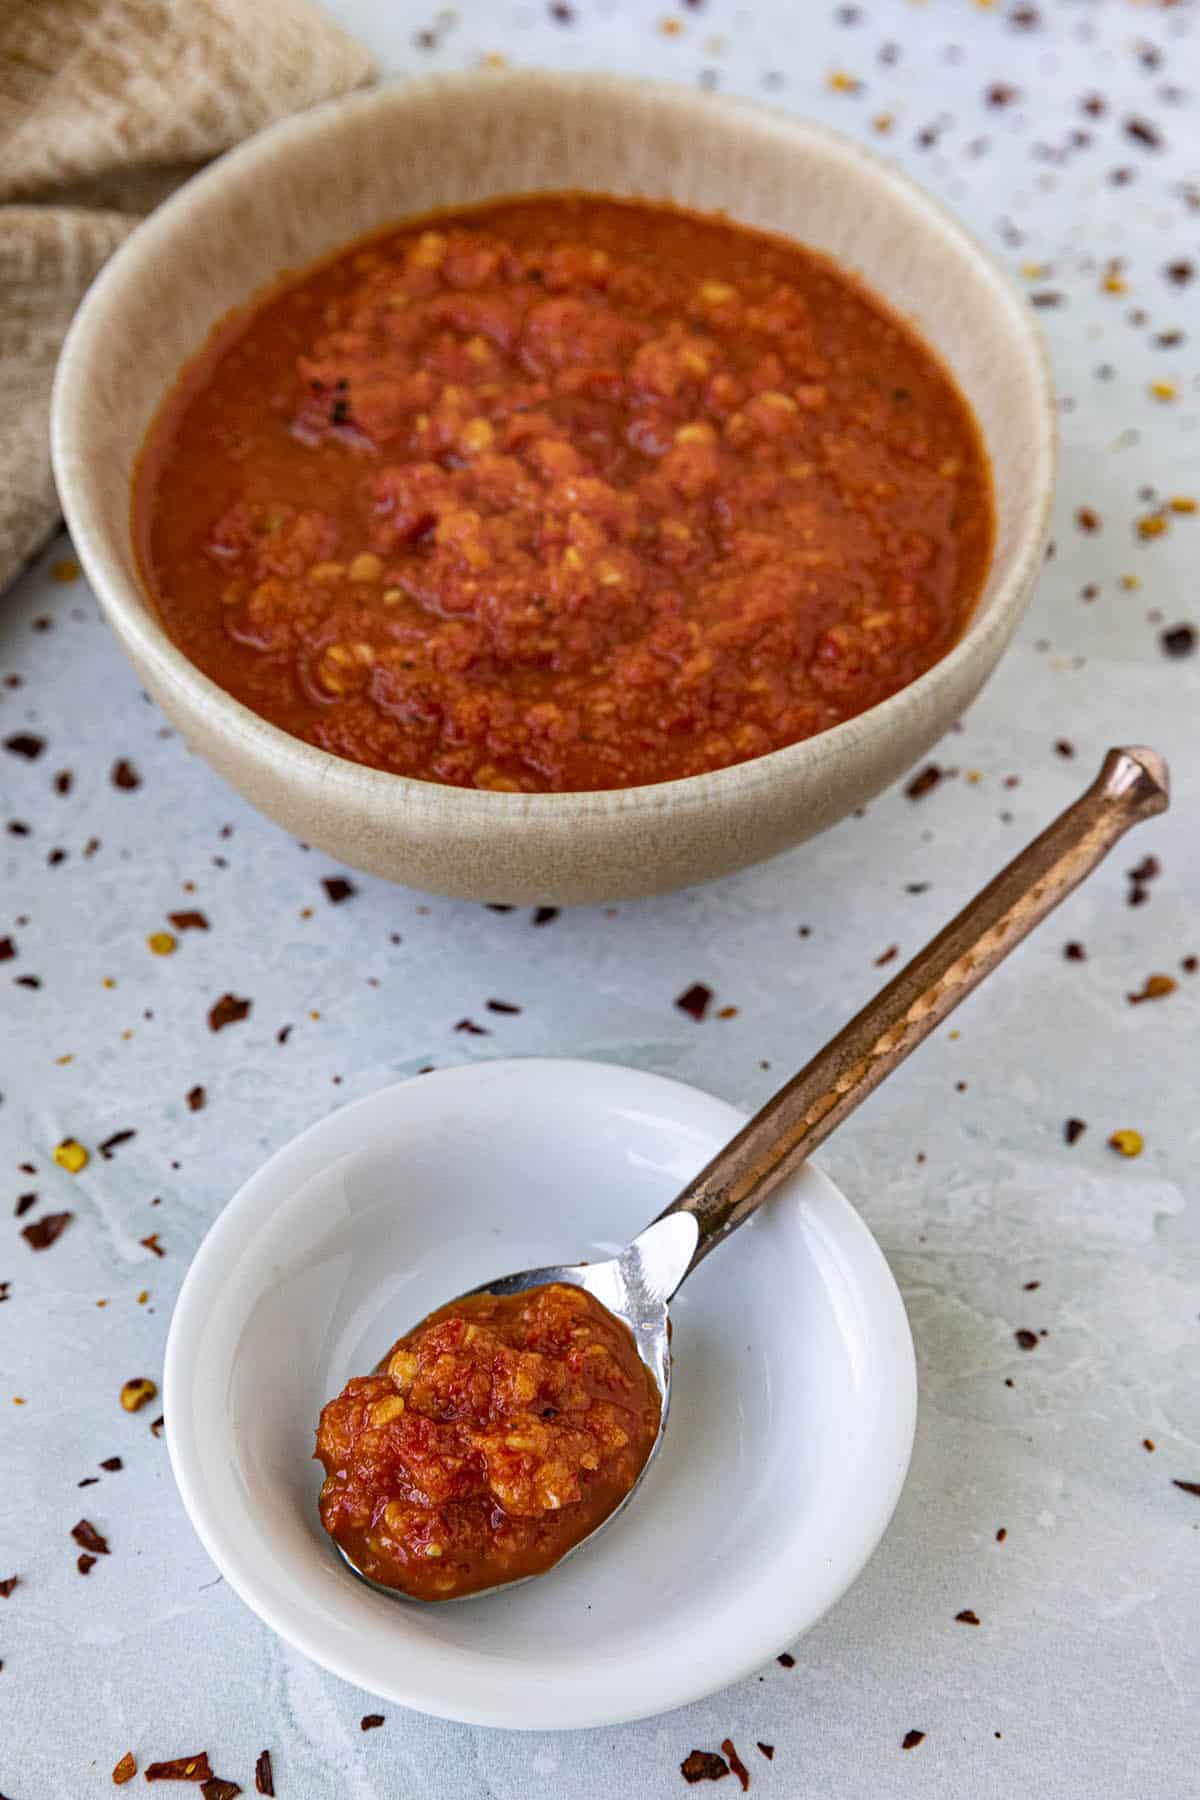 Homemade Chili Garlic Sauce ready to serve